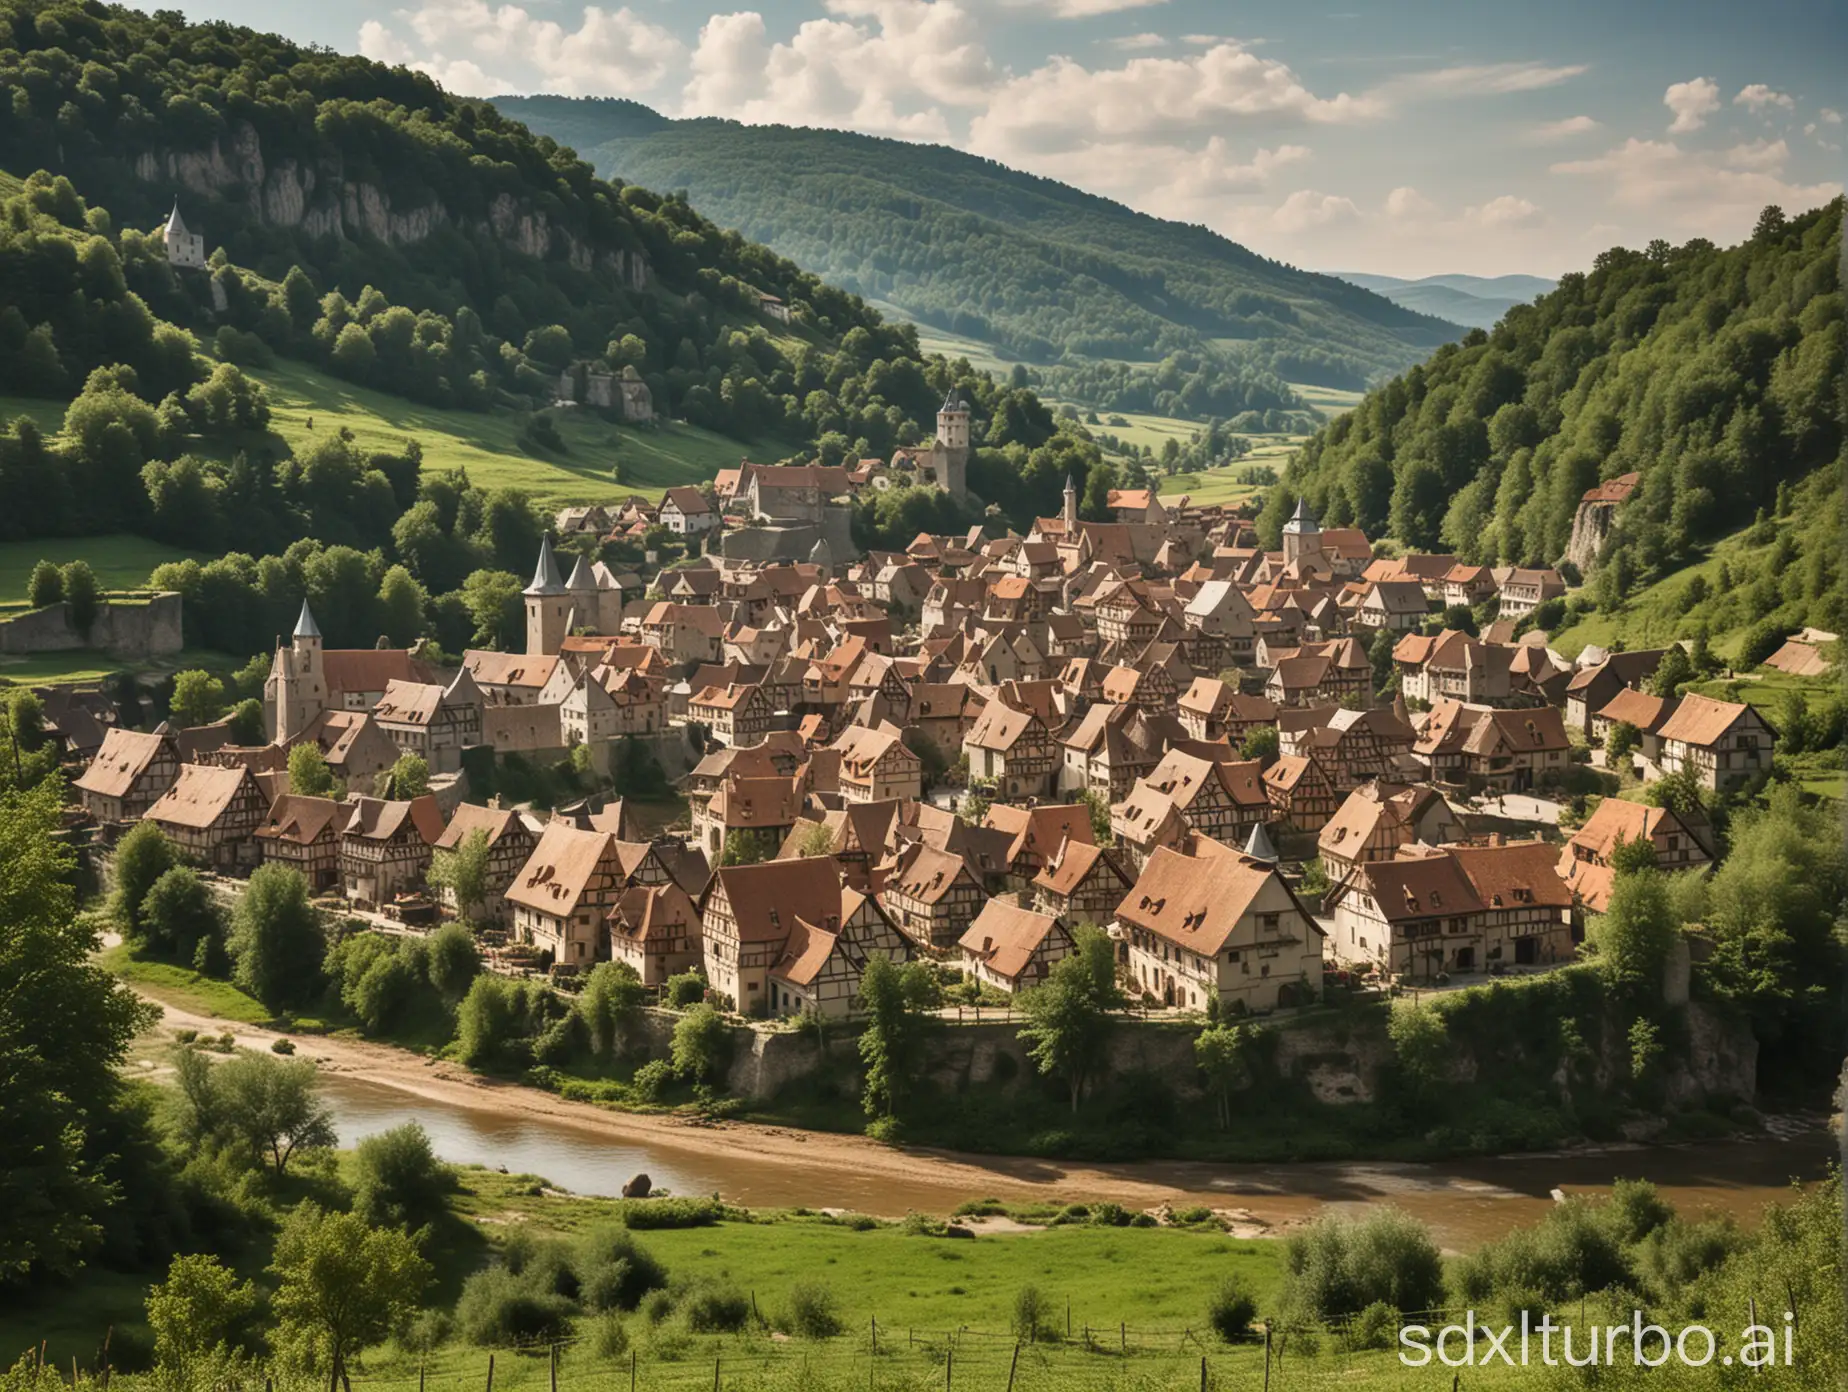 a medieval village in an idyllic landscape